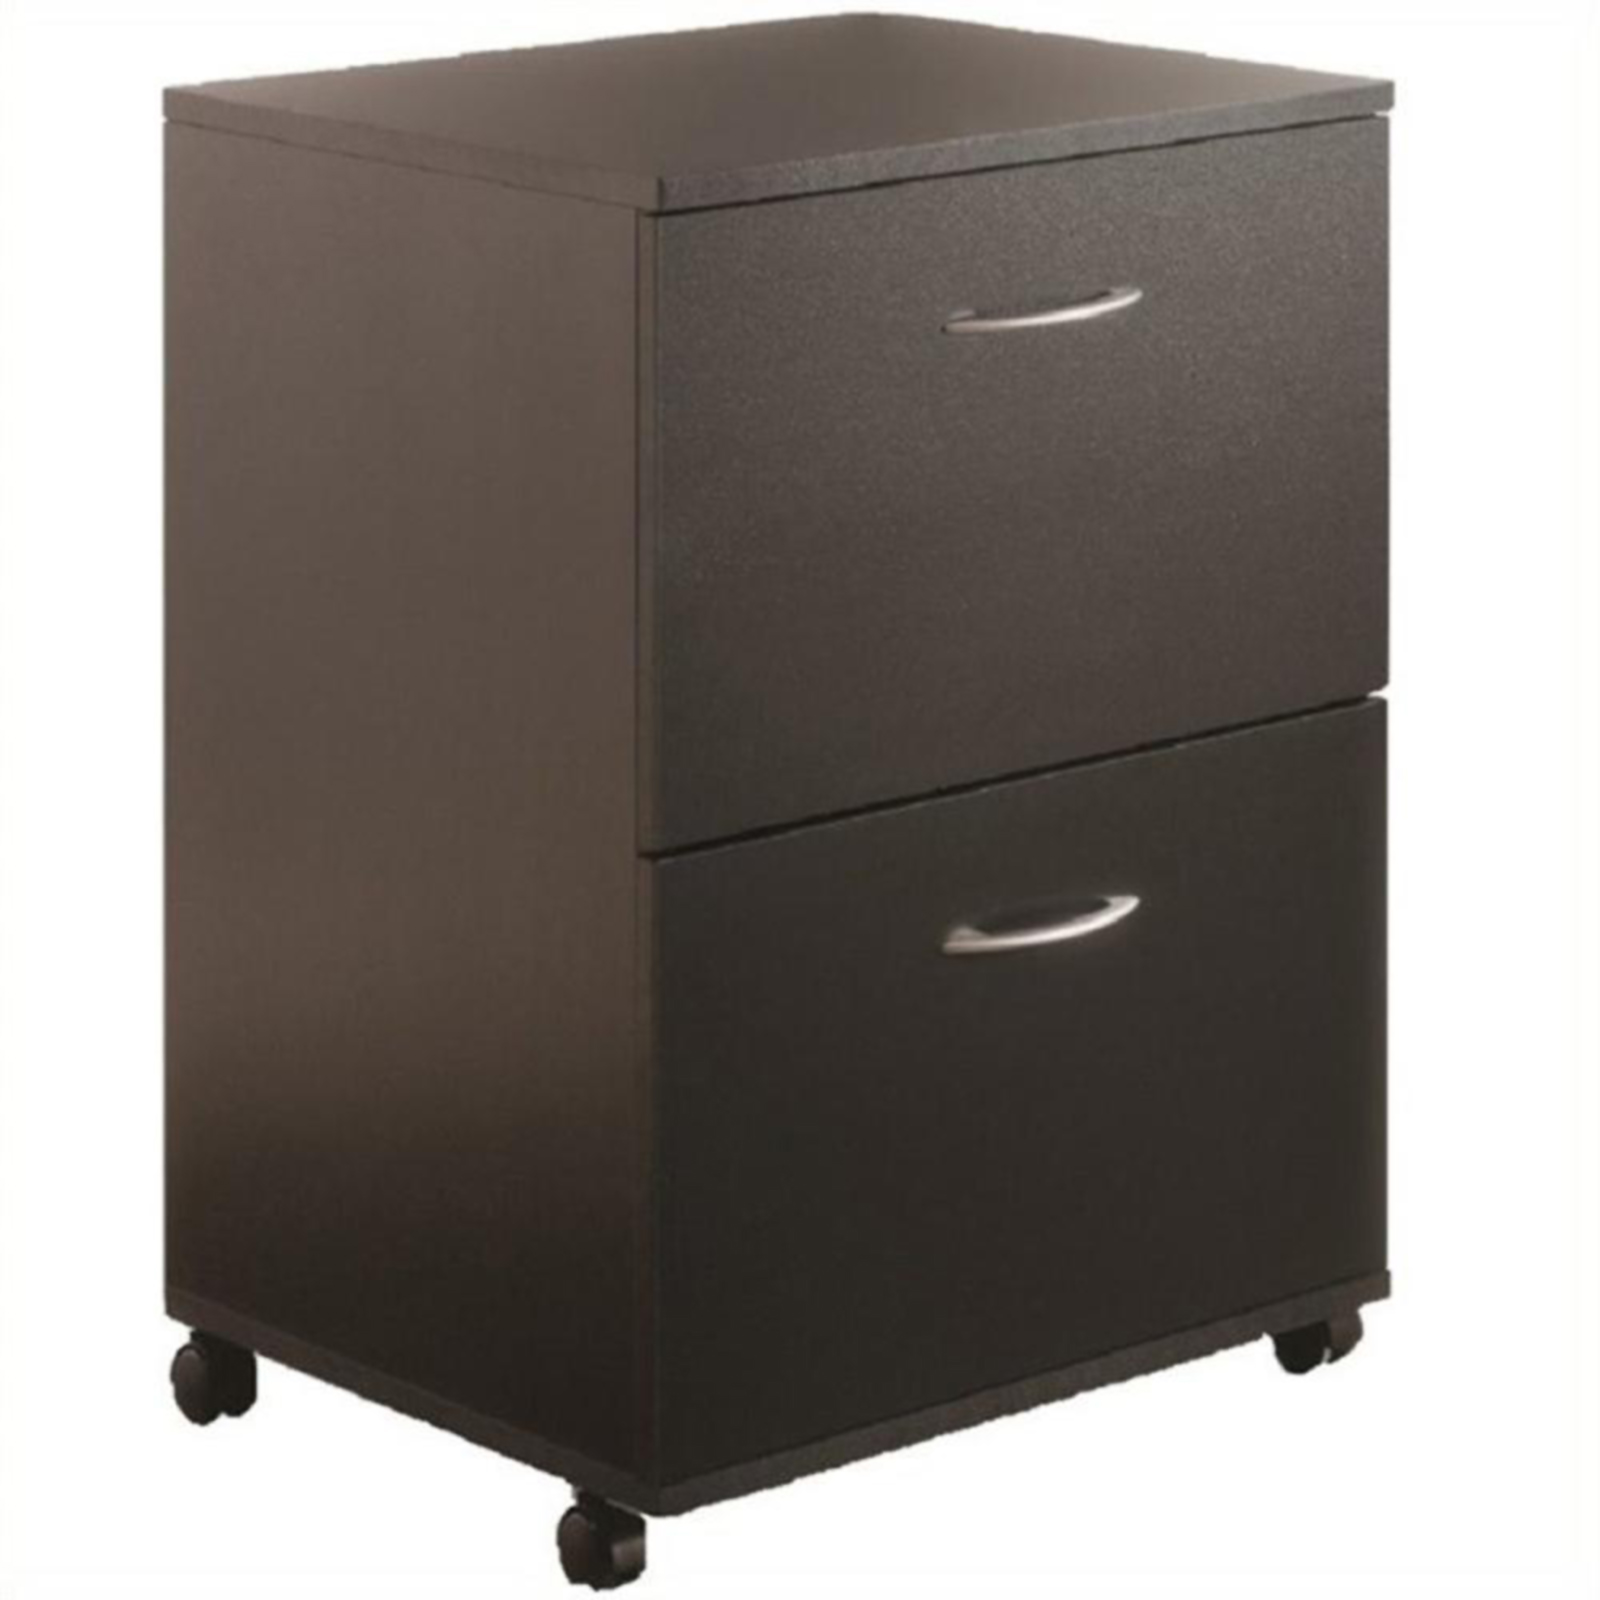 Scranton and Co 2-Drawer Mobile Wood File Cabinet - Black